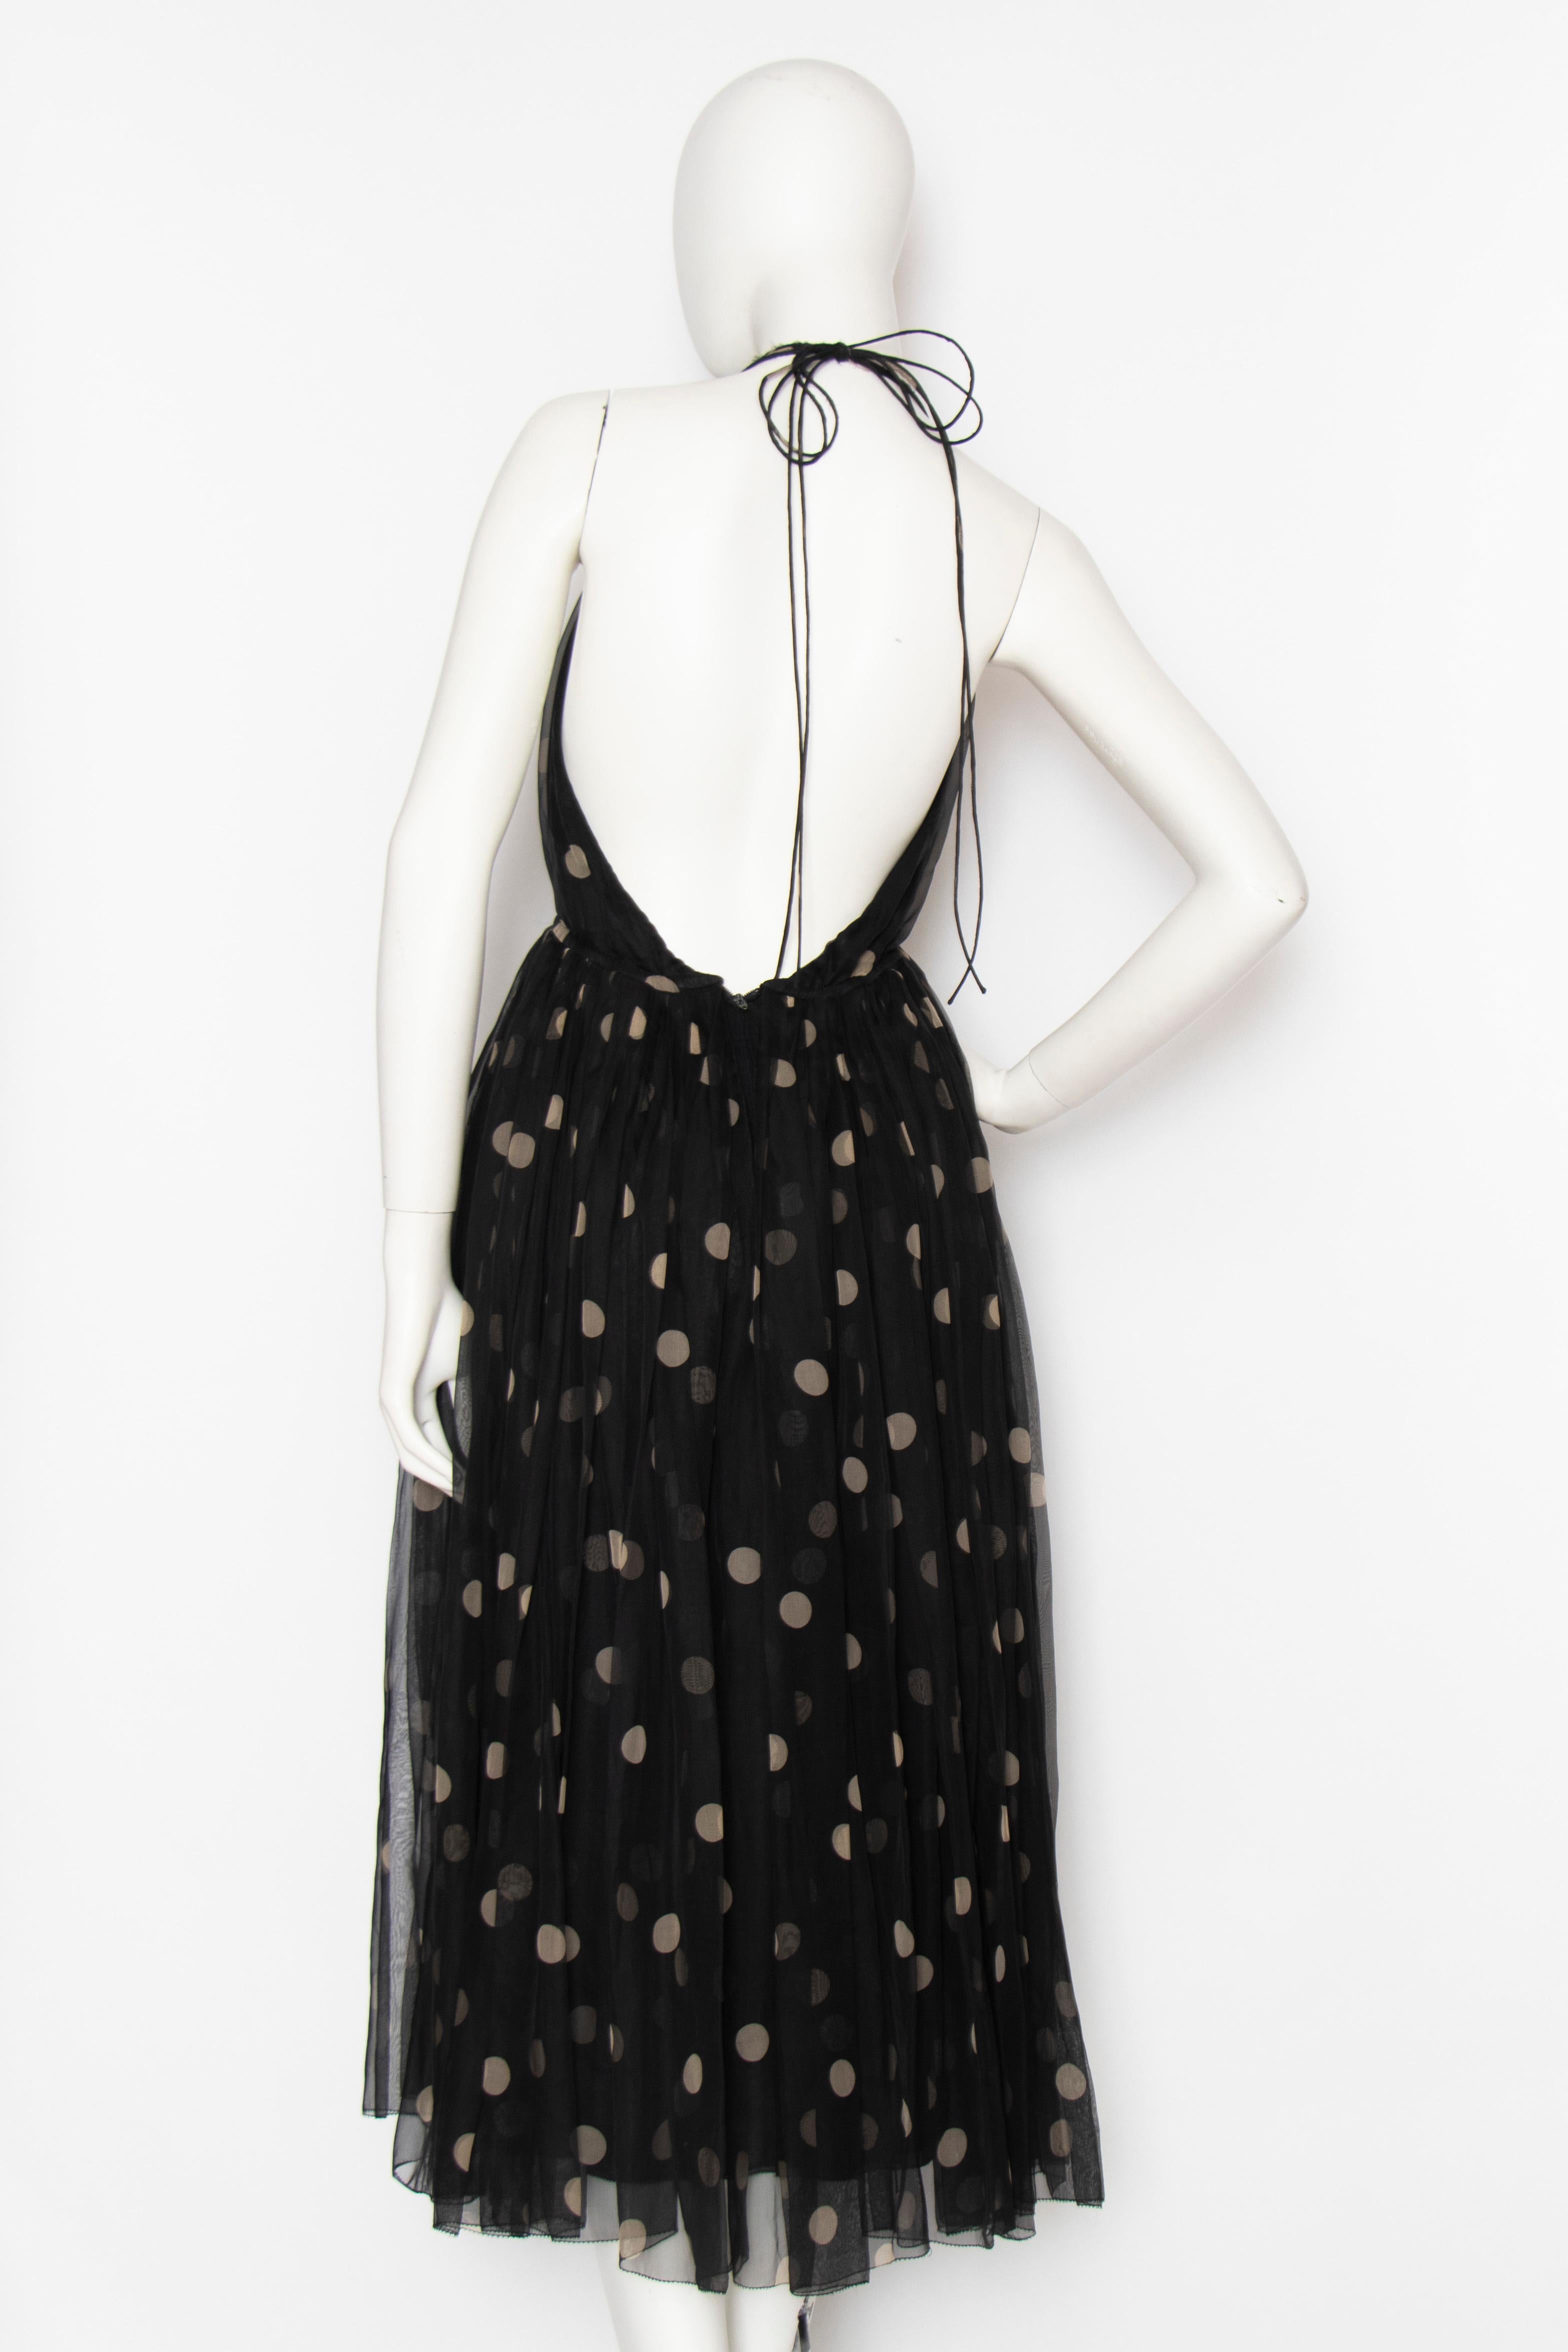 A Vintage Galanos Black Halterneck Evening Dress With Matching Scarf For Sale 2